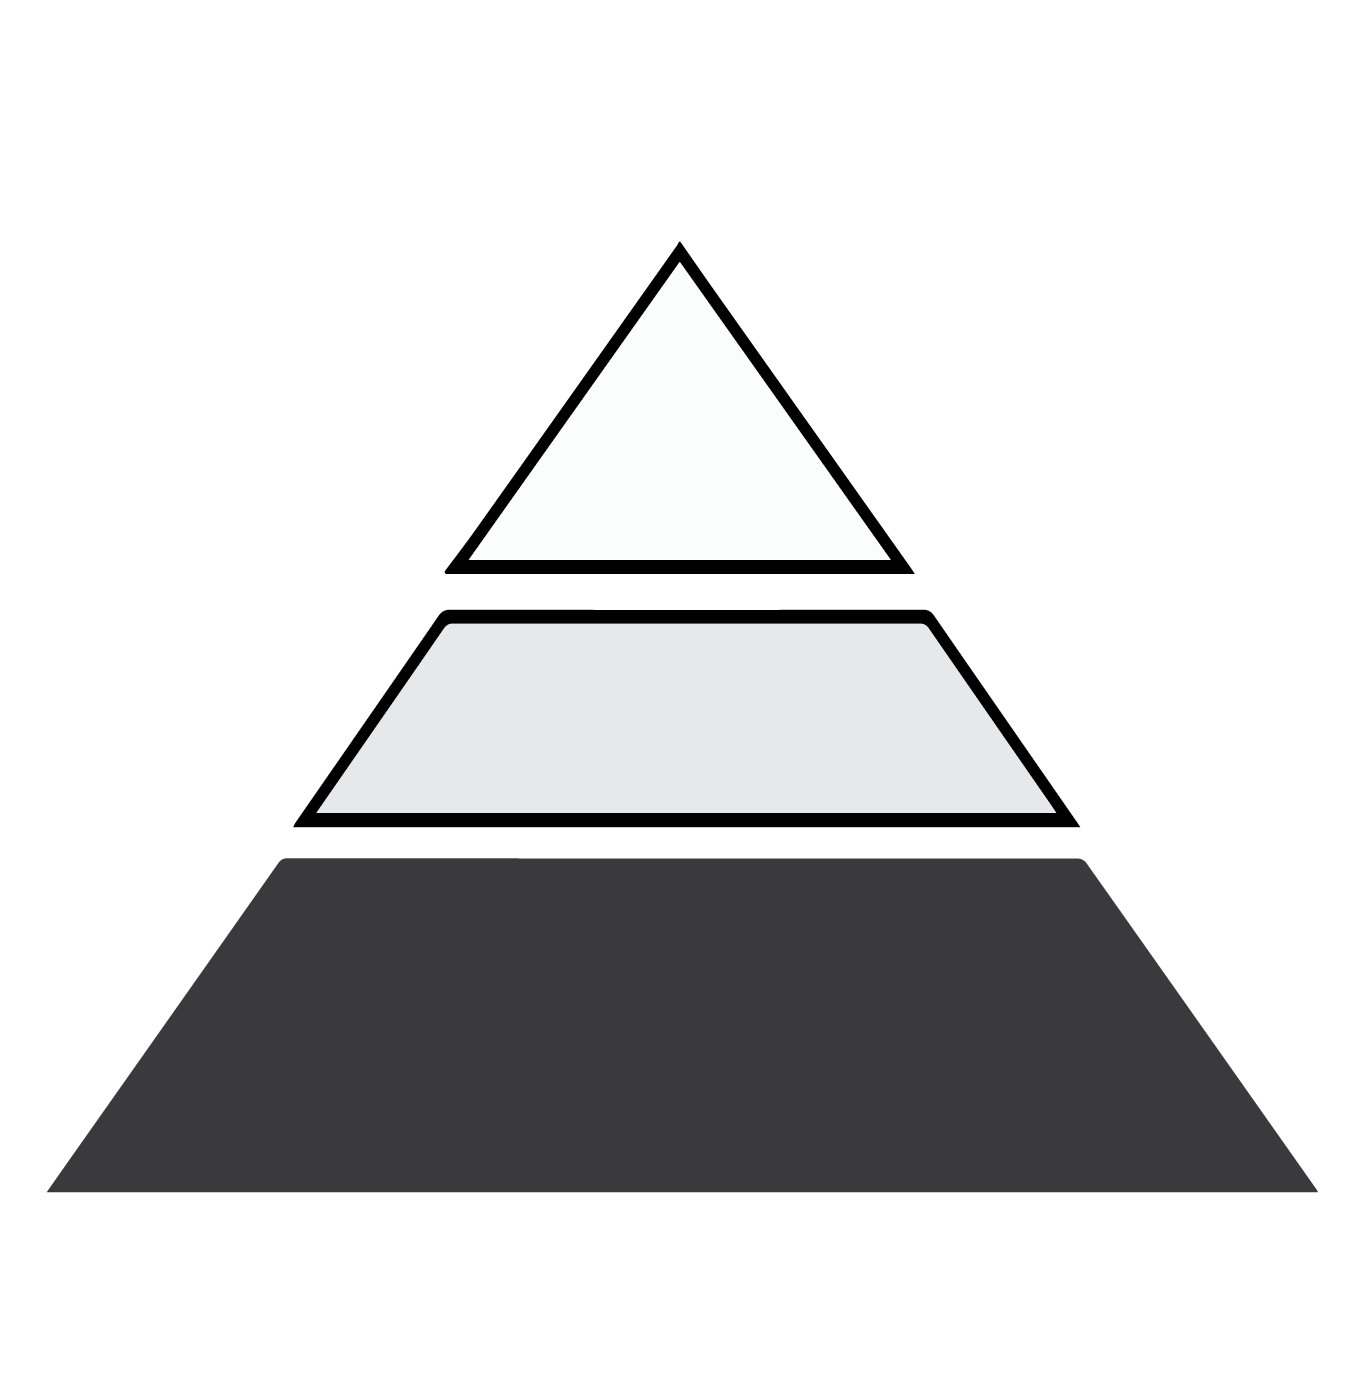 Bottom of the pyramid